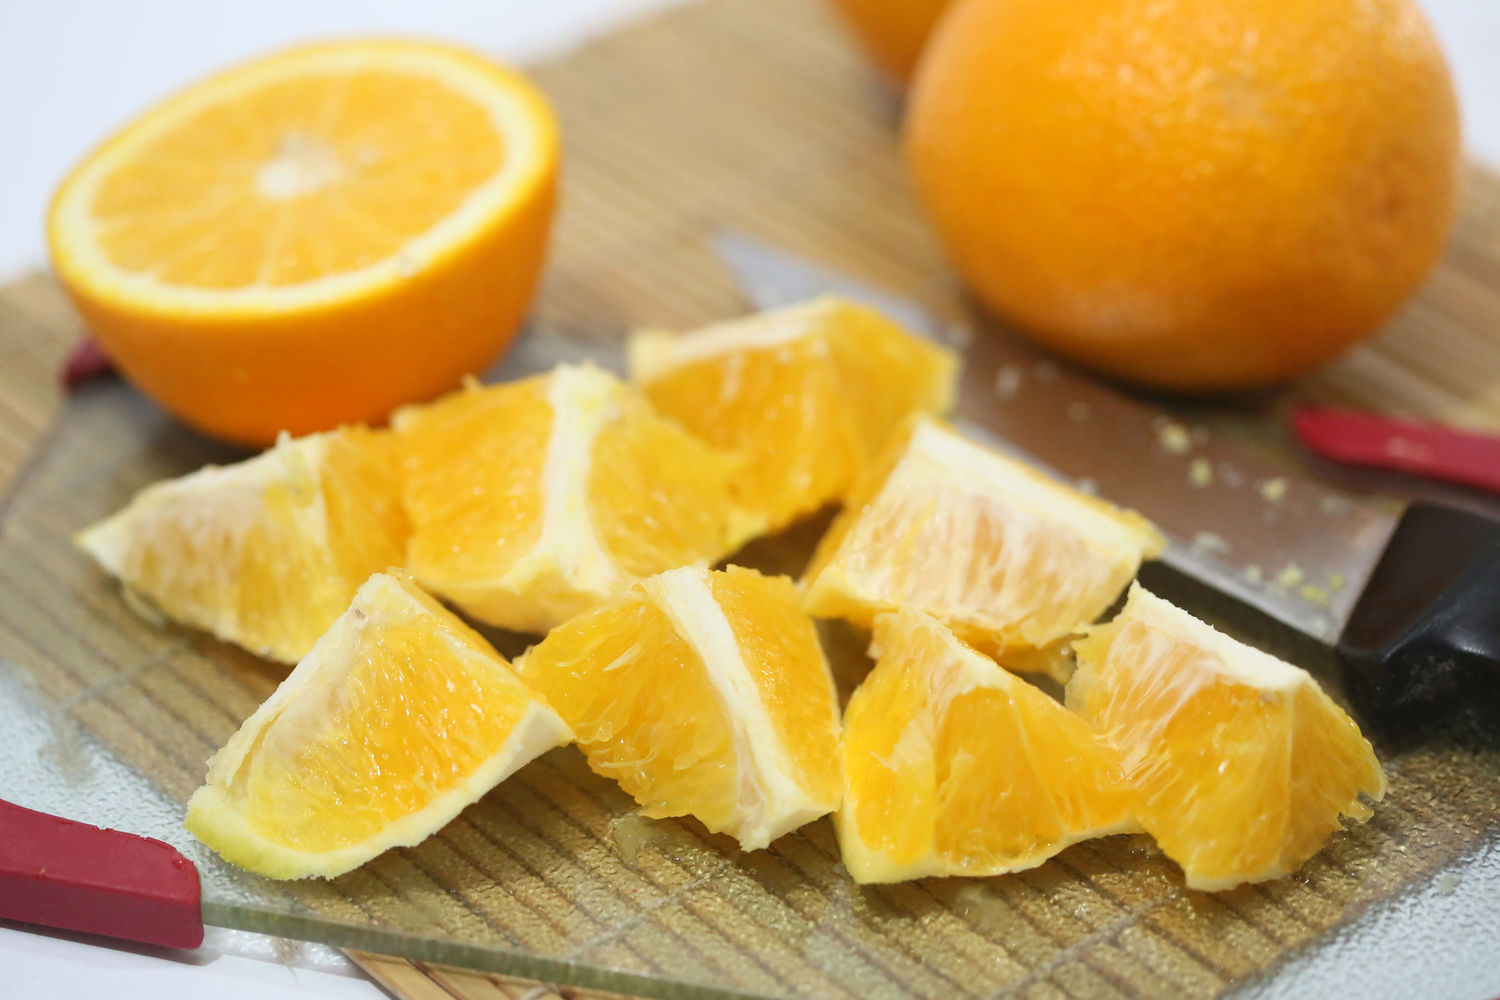 Mitos e verdades sobre o sumo de laranja natural